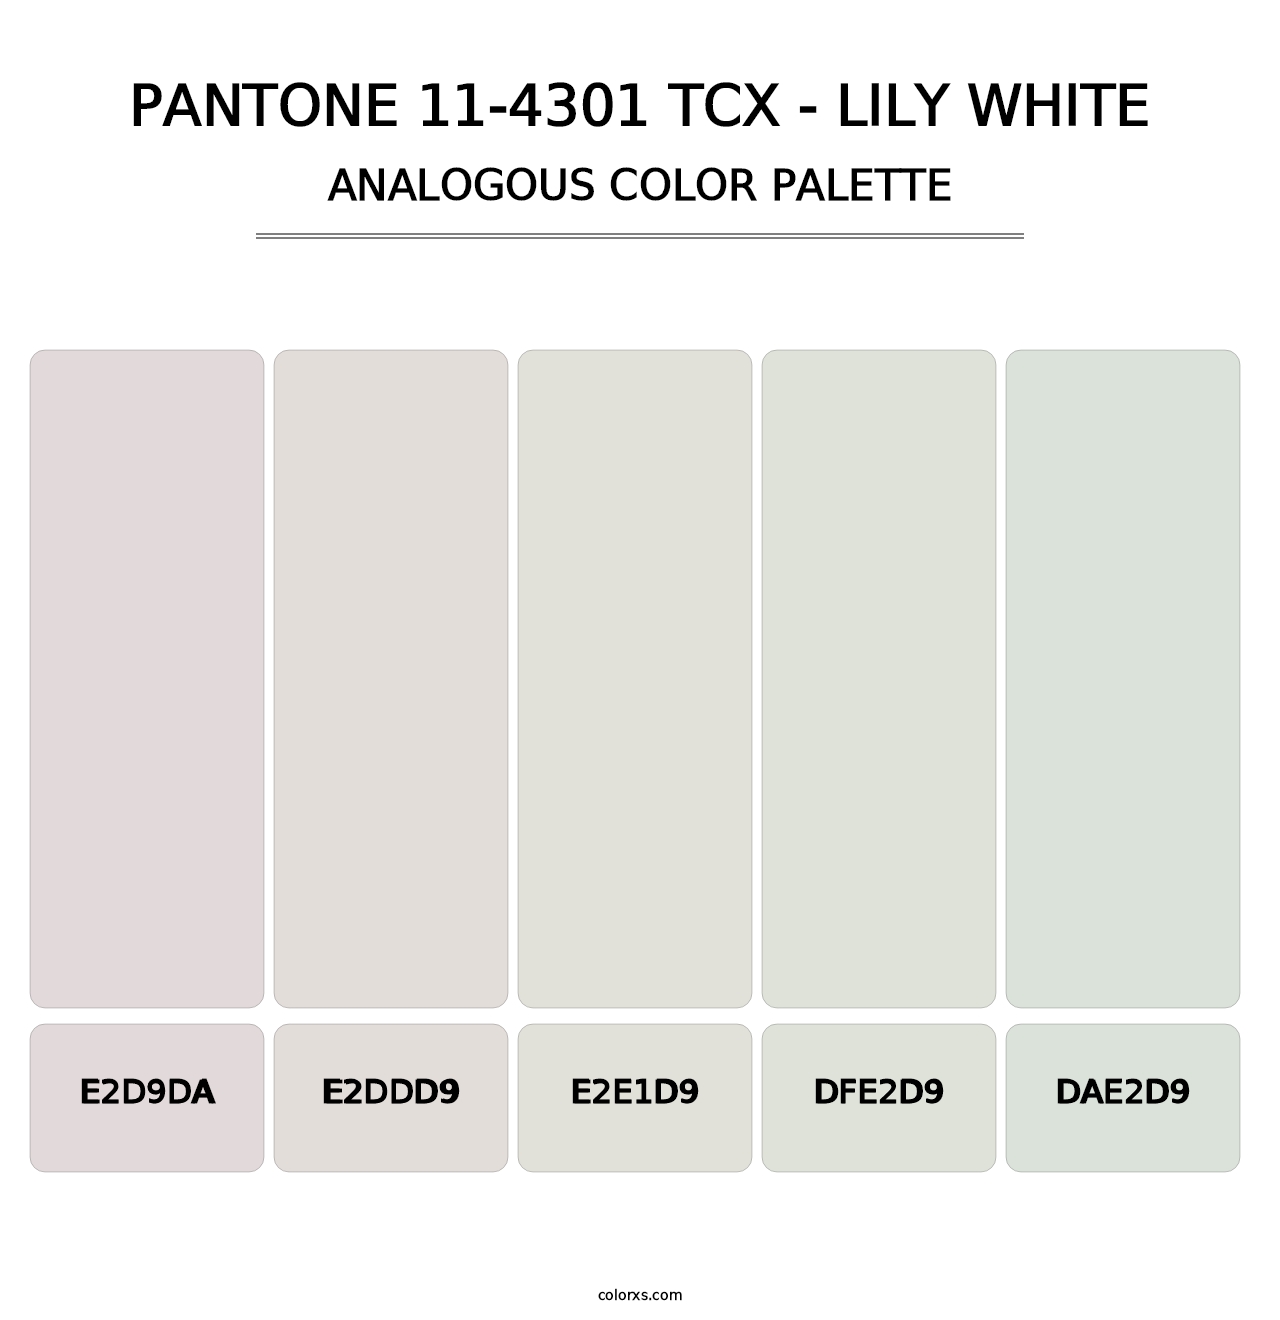 PANTONE 11-4301 TCX - Lily White - Analogous Color Palette